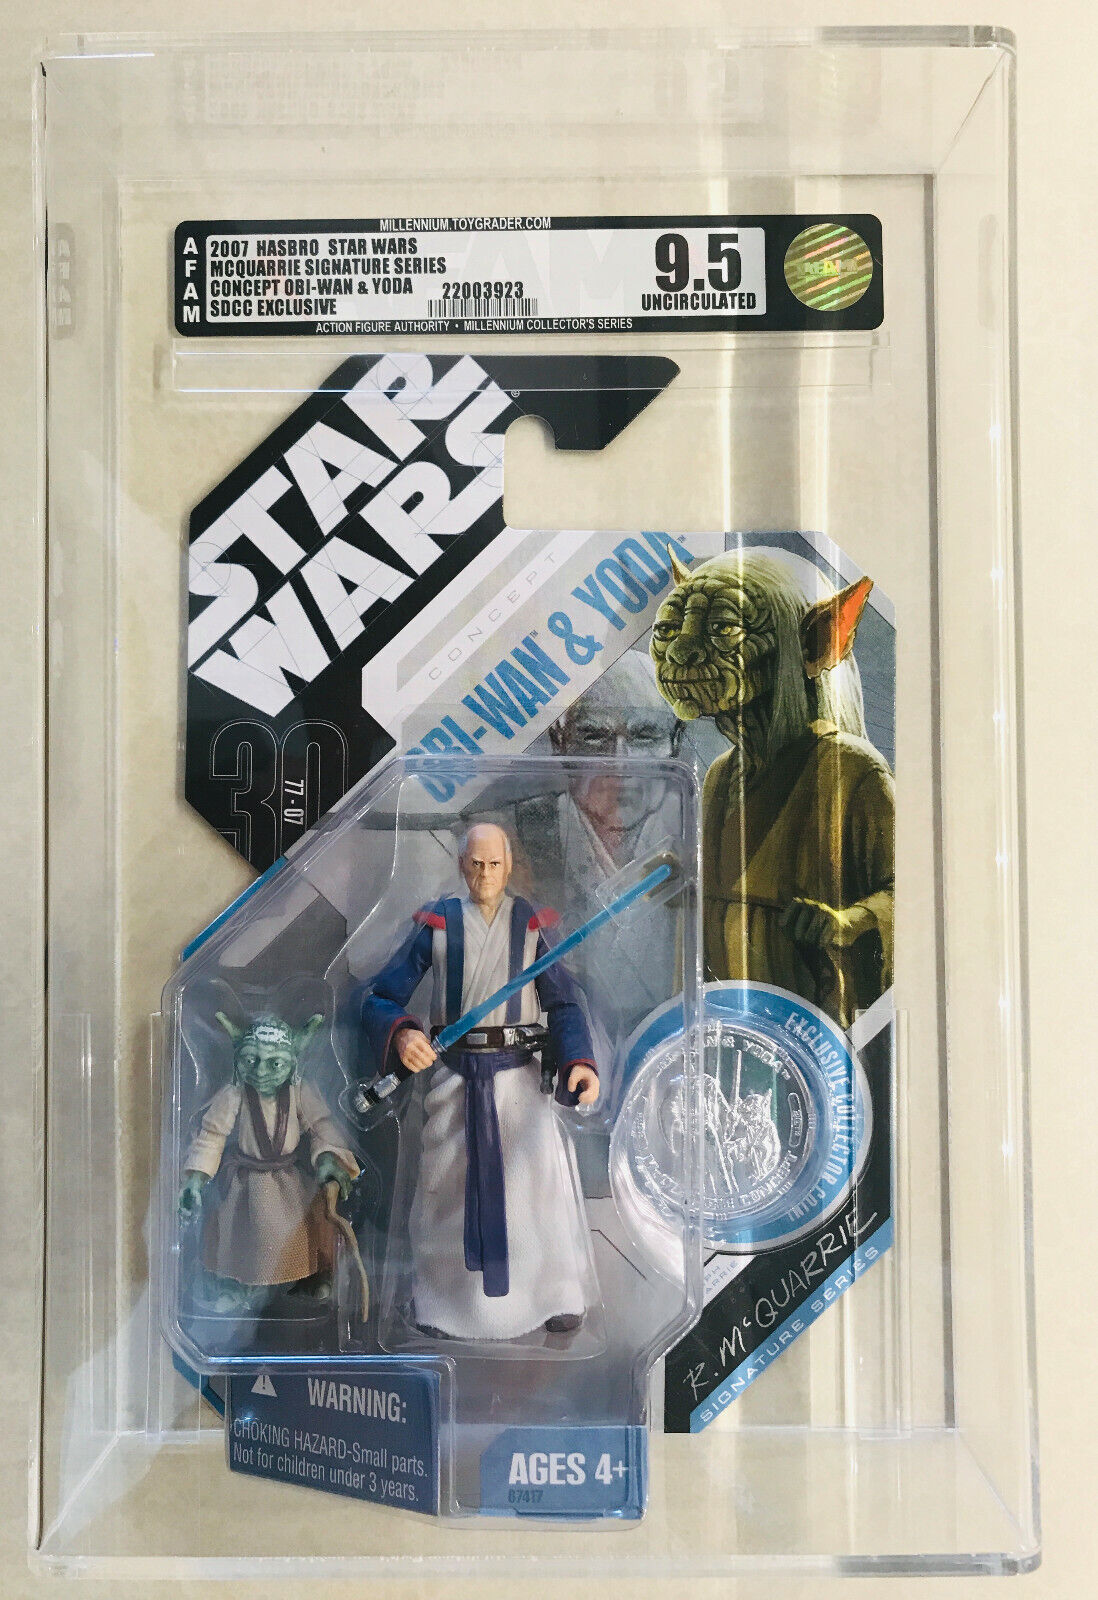 Star Wars SDCC Exclusive McQuarrie Concept Obi-Wan & Yoda +Coin AFA U9.5 (2007)